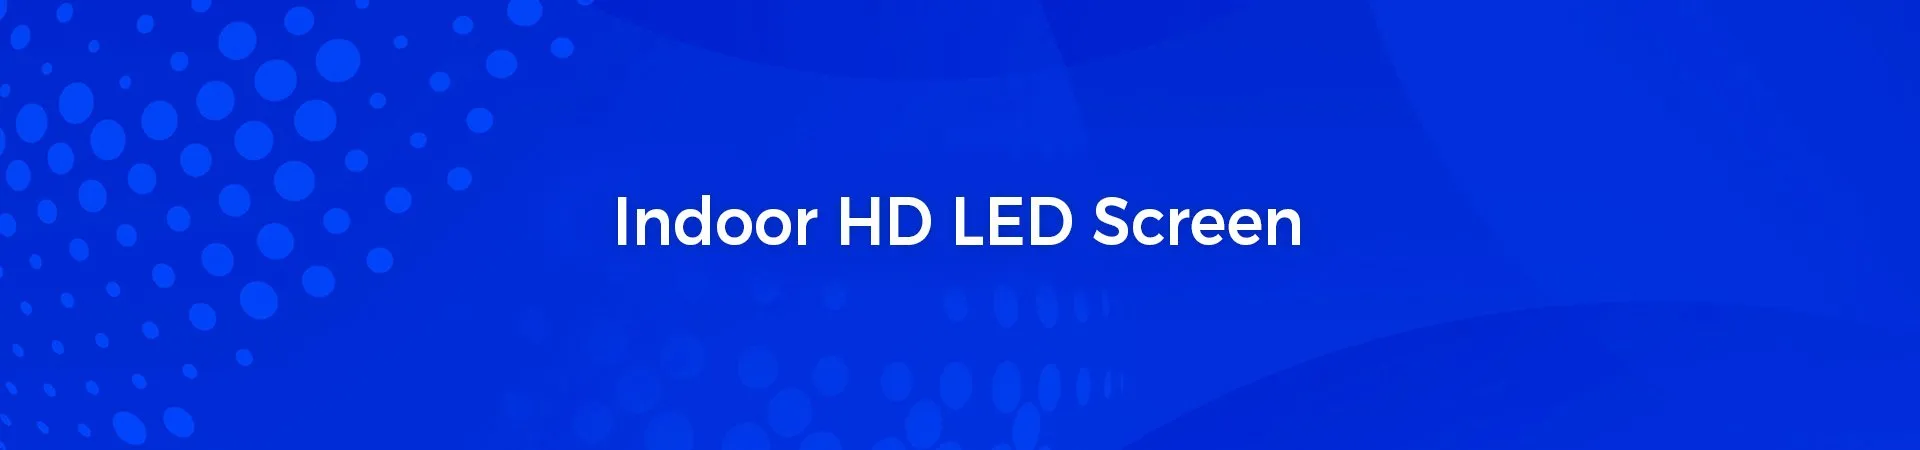 Tela de LED interna HD